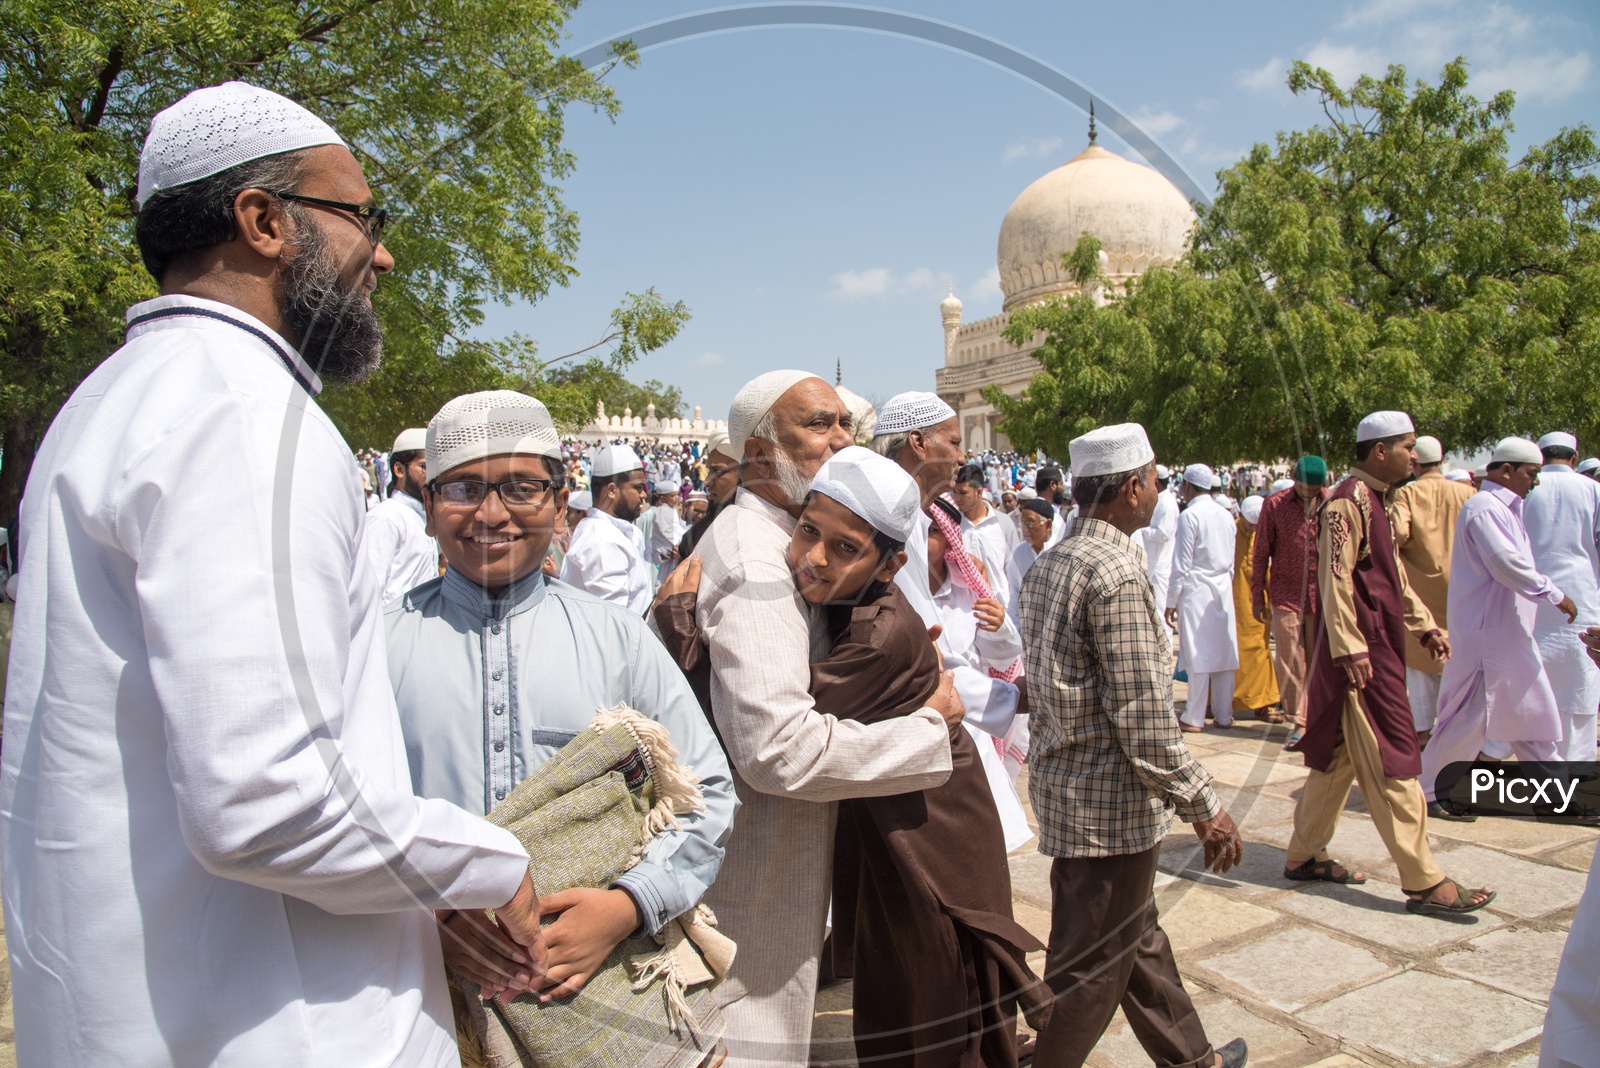 Eid greetings at Qutb Shahi Tombs during Ramadan